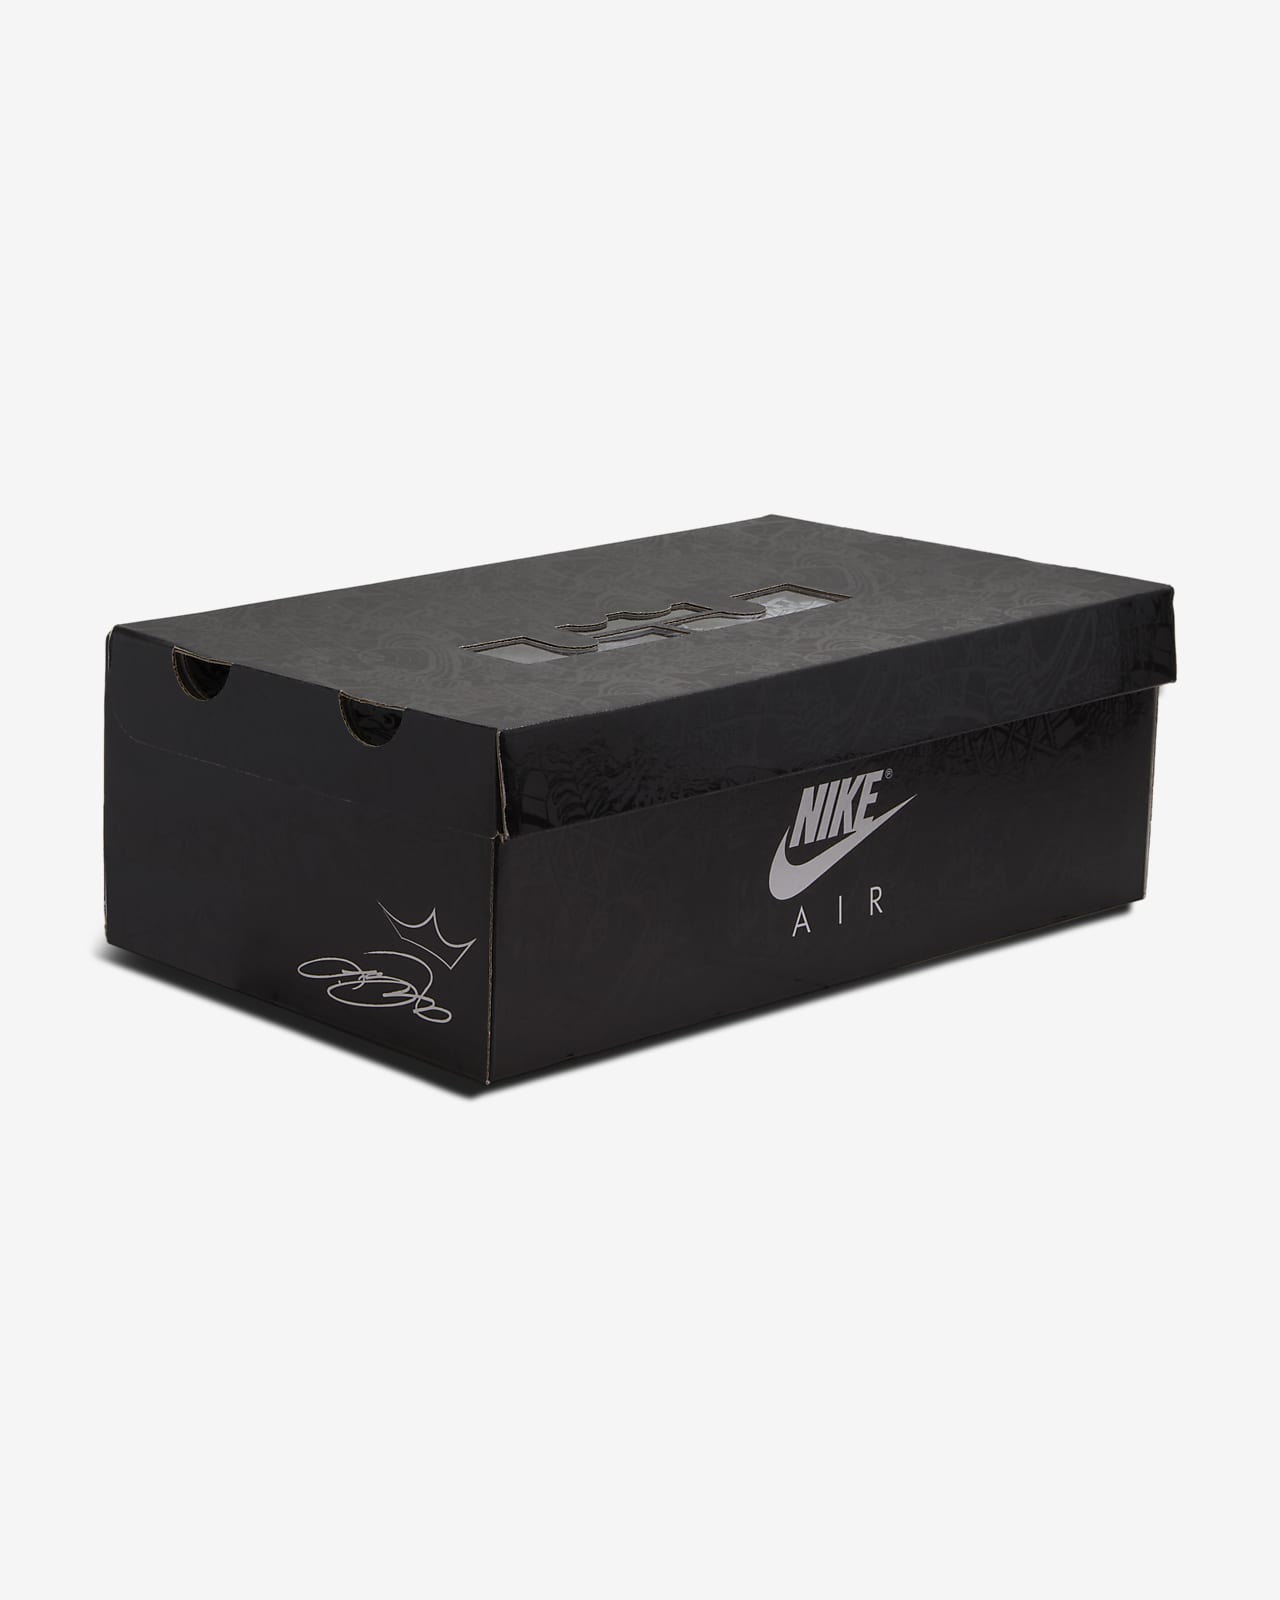 Nike Shoe Box - Hibbett